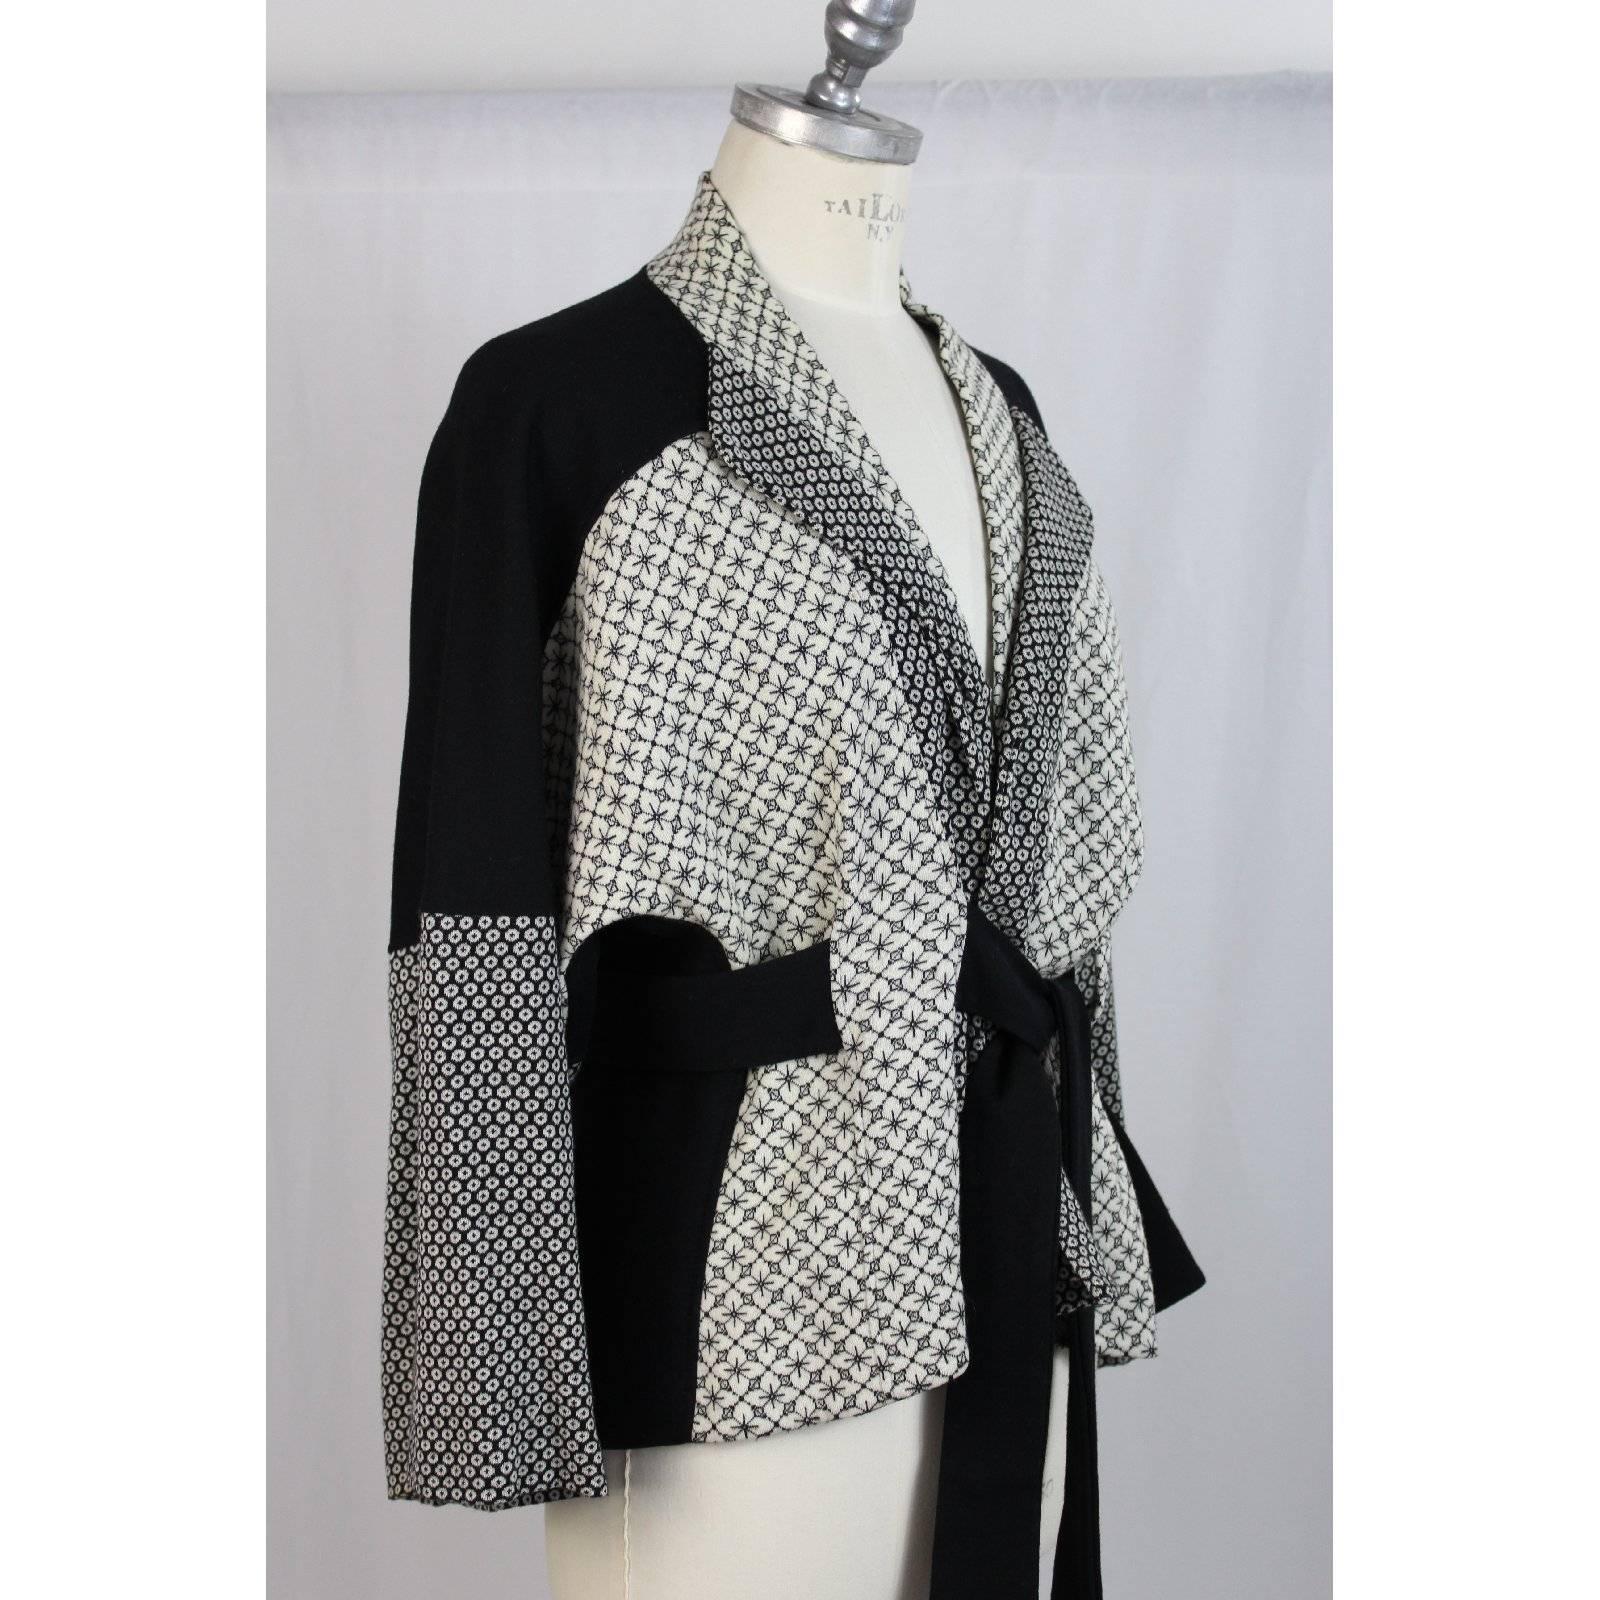 Kenzo black white wool sweater jacket kimono women’s size M made italy 1990s 1